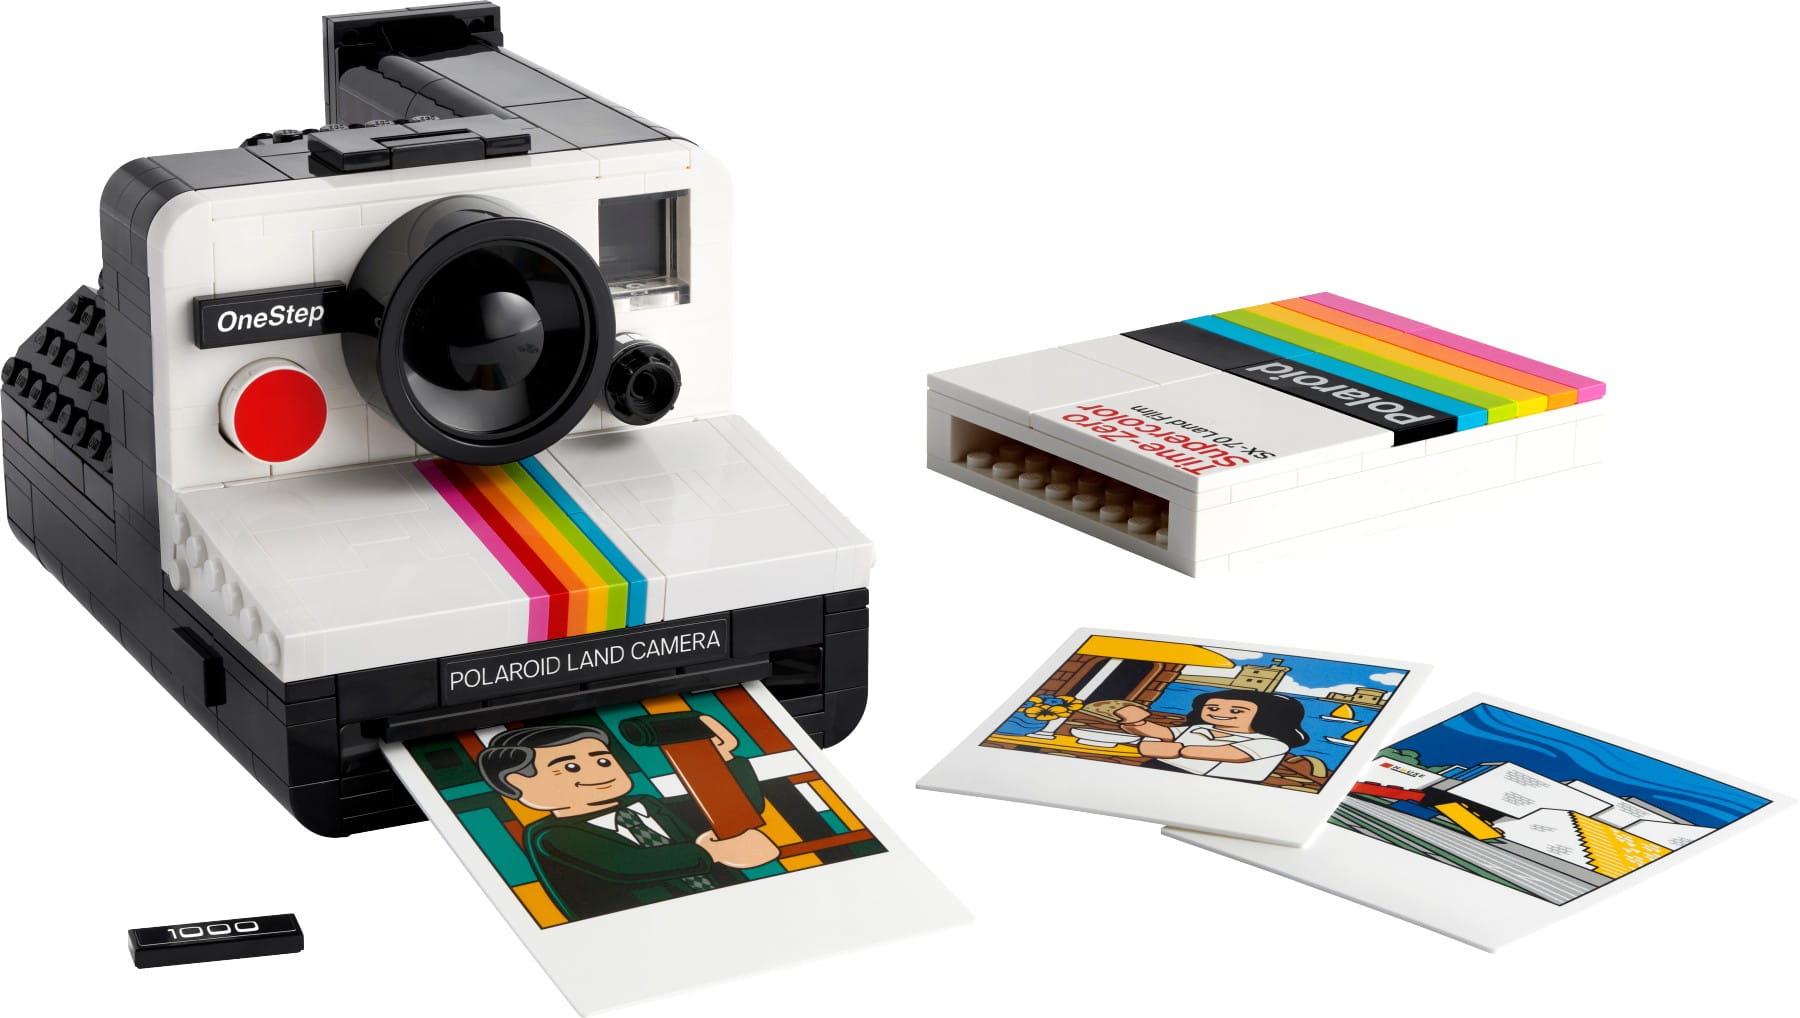 LEGO IDEAS Edition Polaroid Kamera OneStep SX-70 Sofortbildkamera